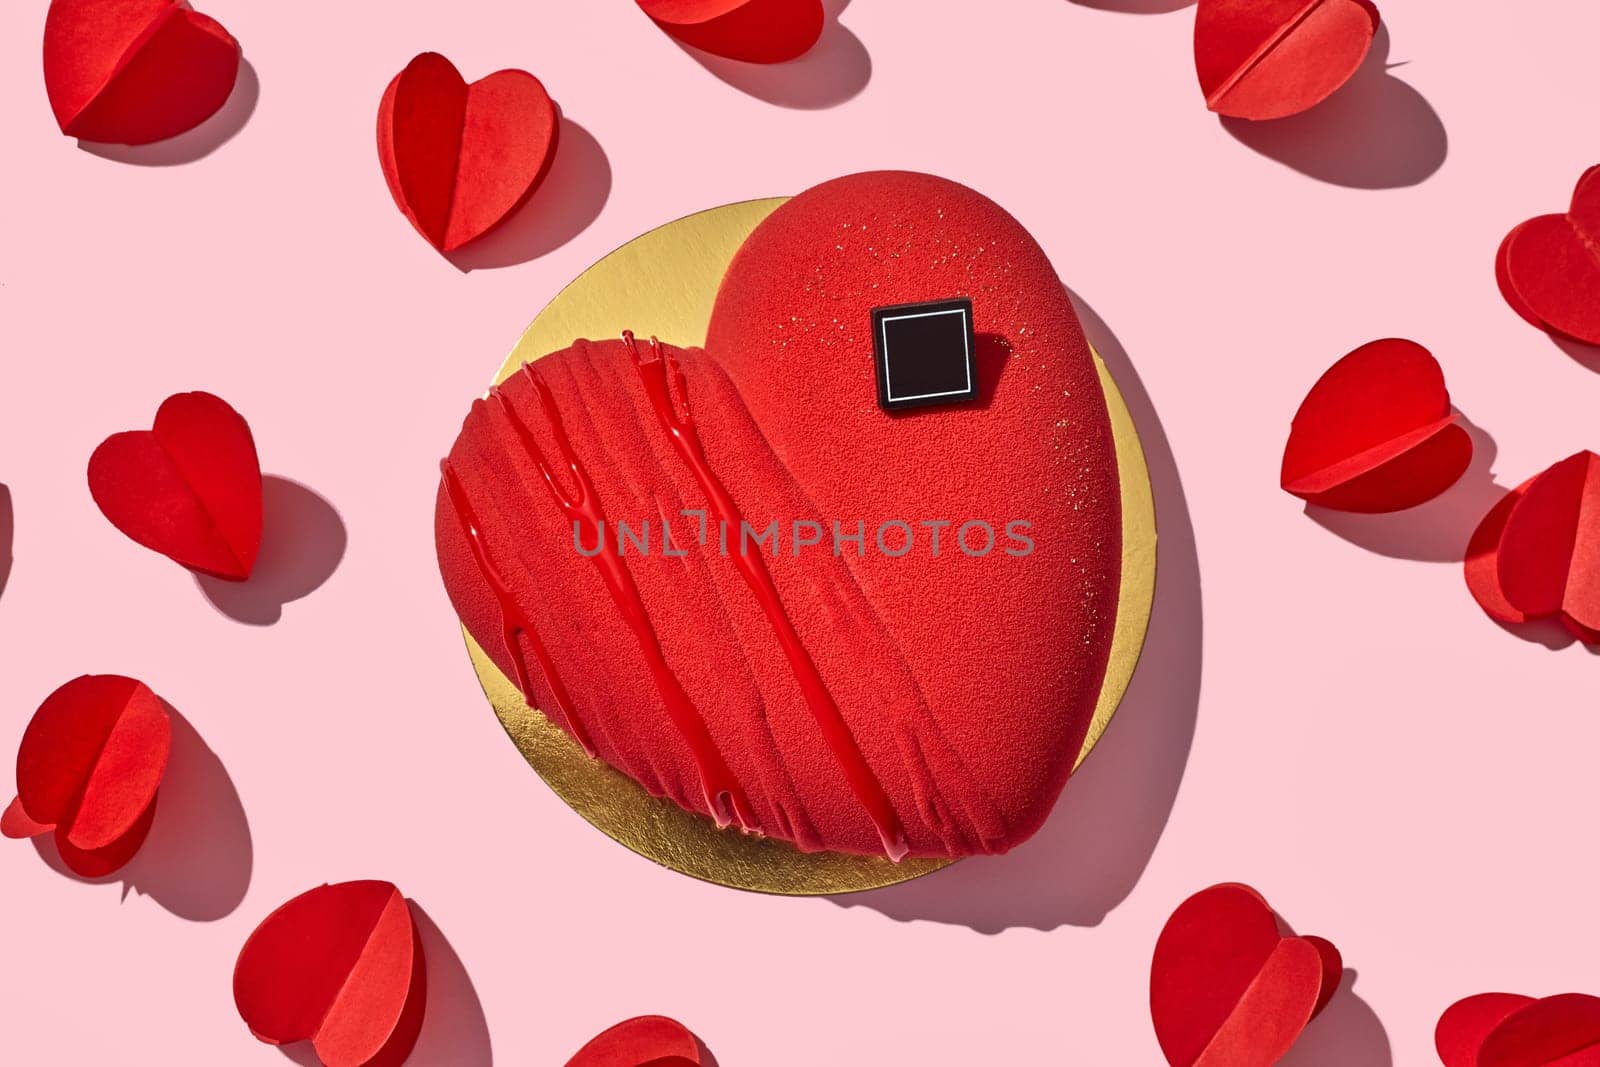 Heart-shaped red velvet cake on pink background by nazarovsergey